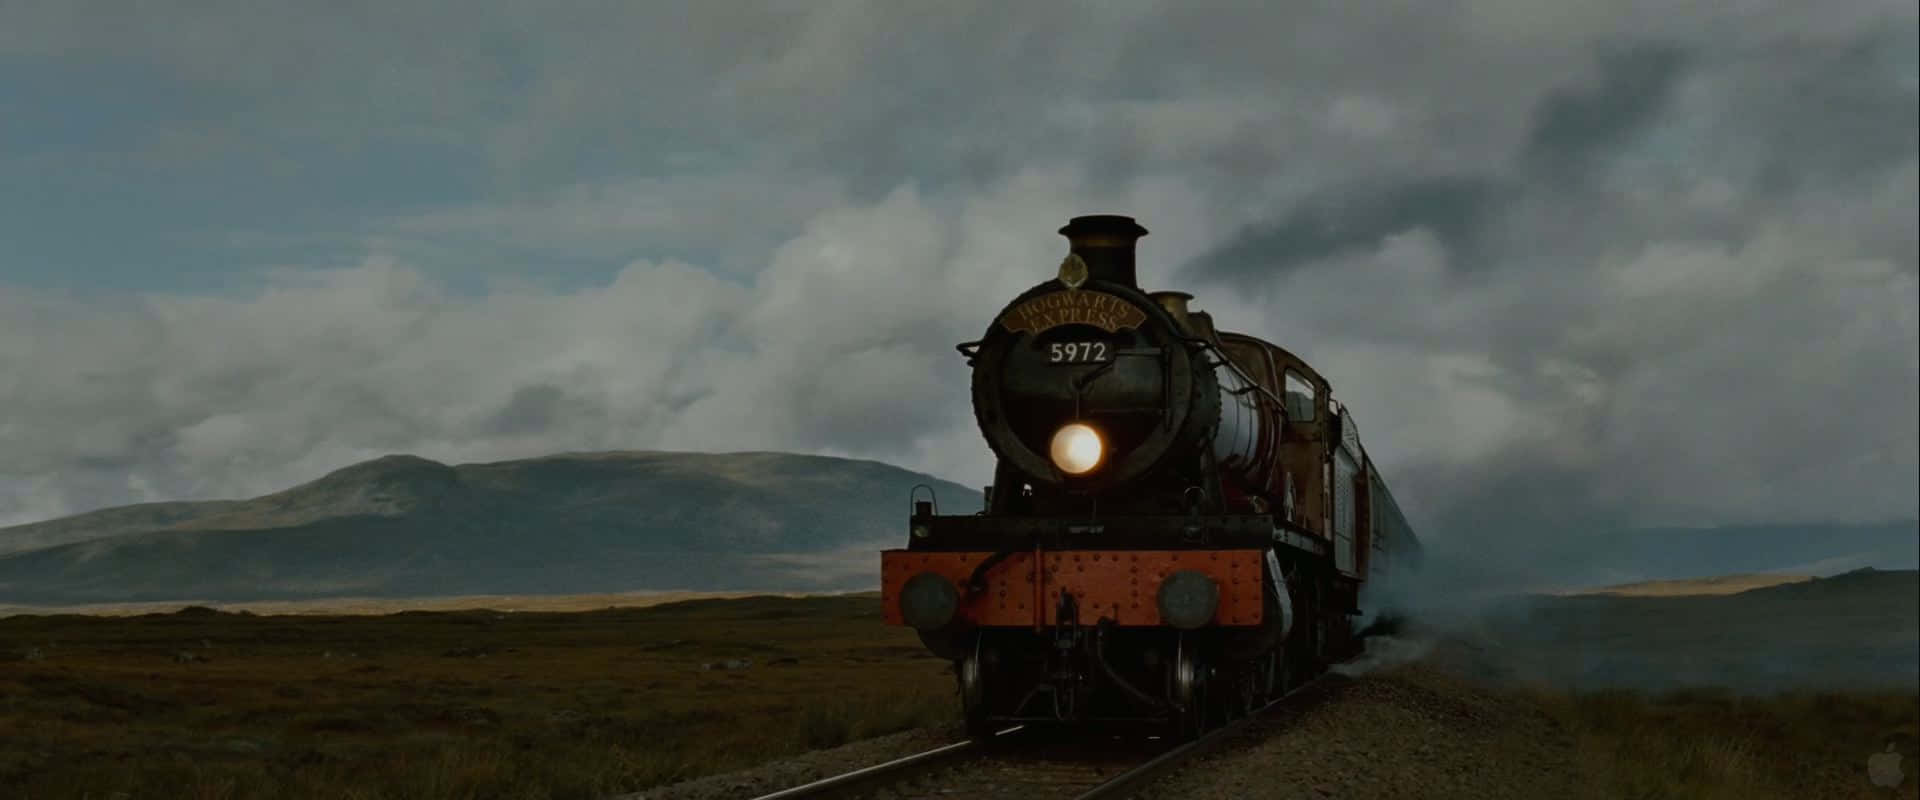 Hogwarts Express arriving at the magical railway platform Wallpaper